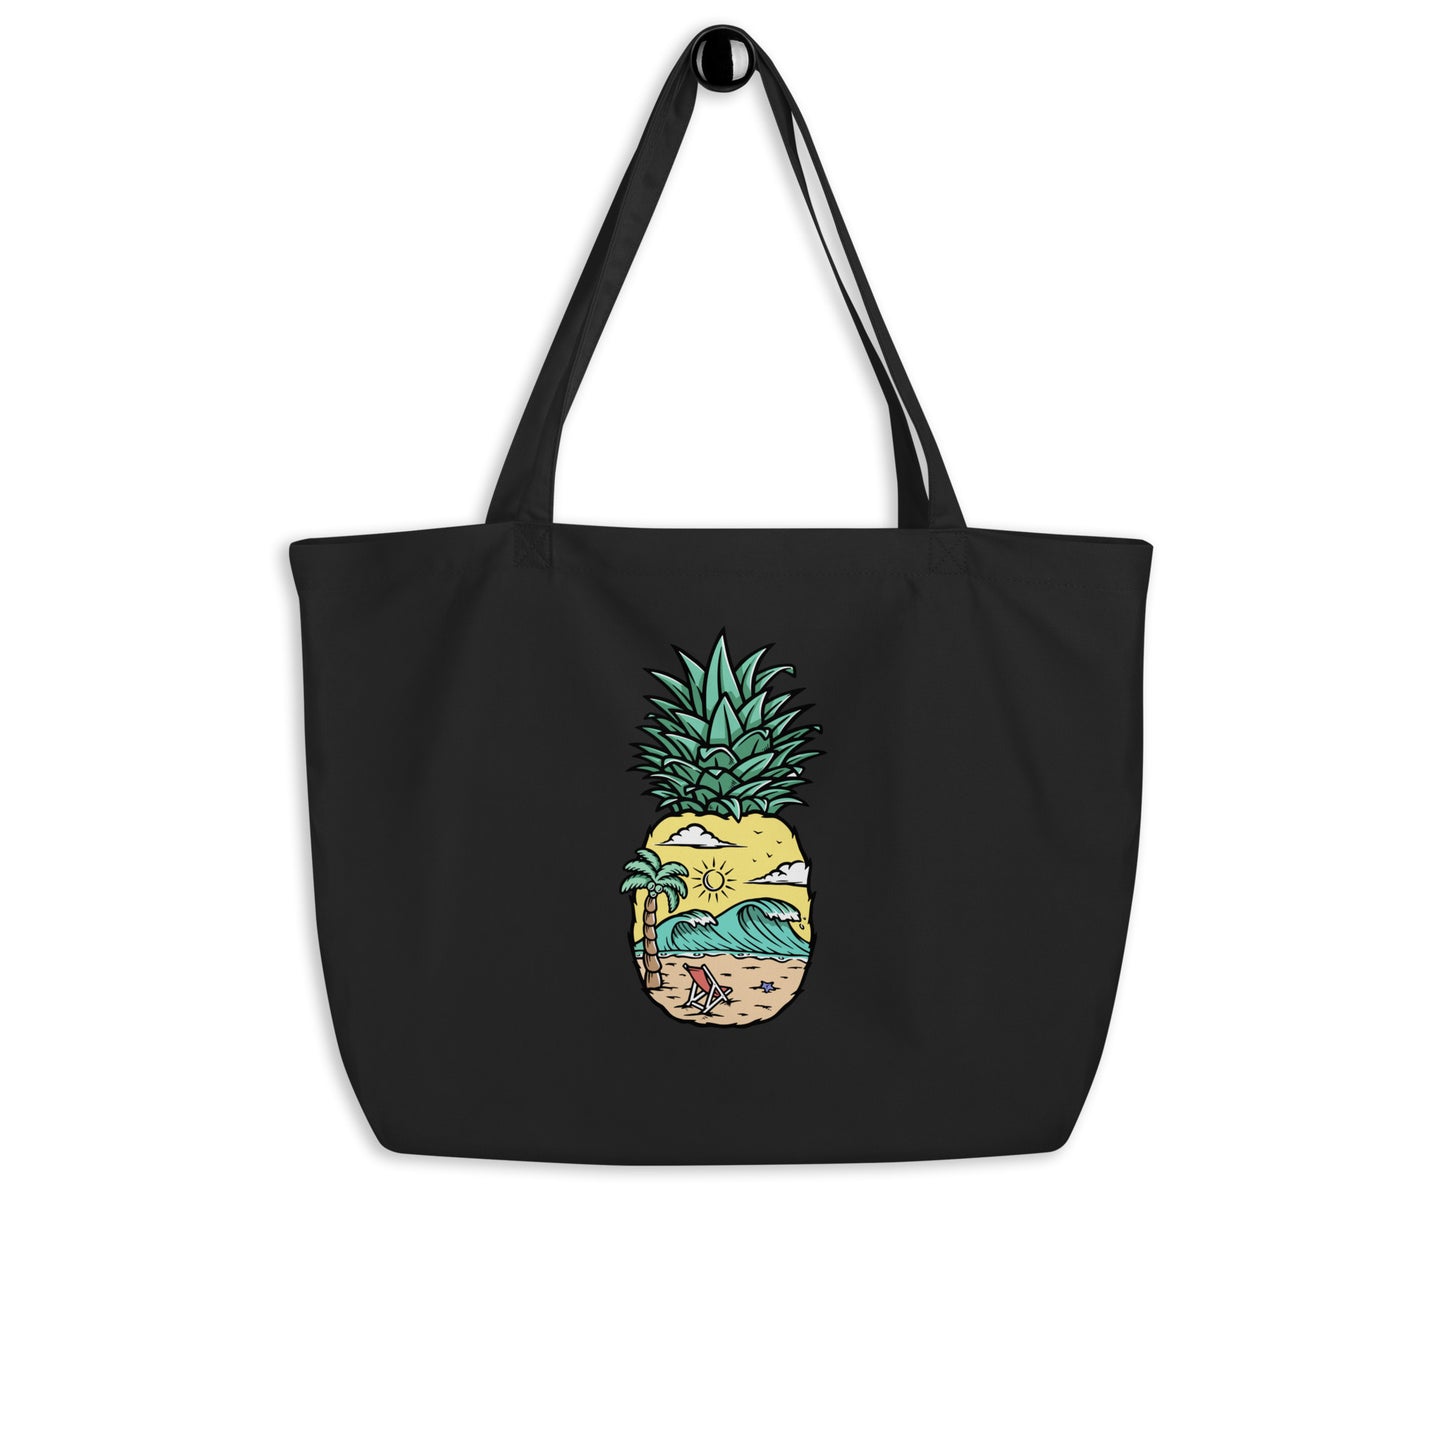 Pineapple Beach Large Black Tote Bag